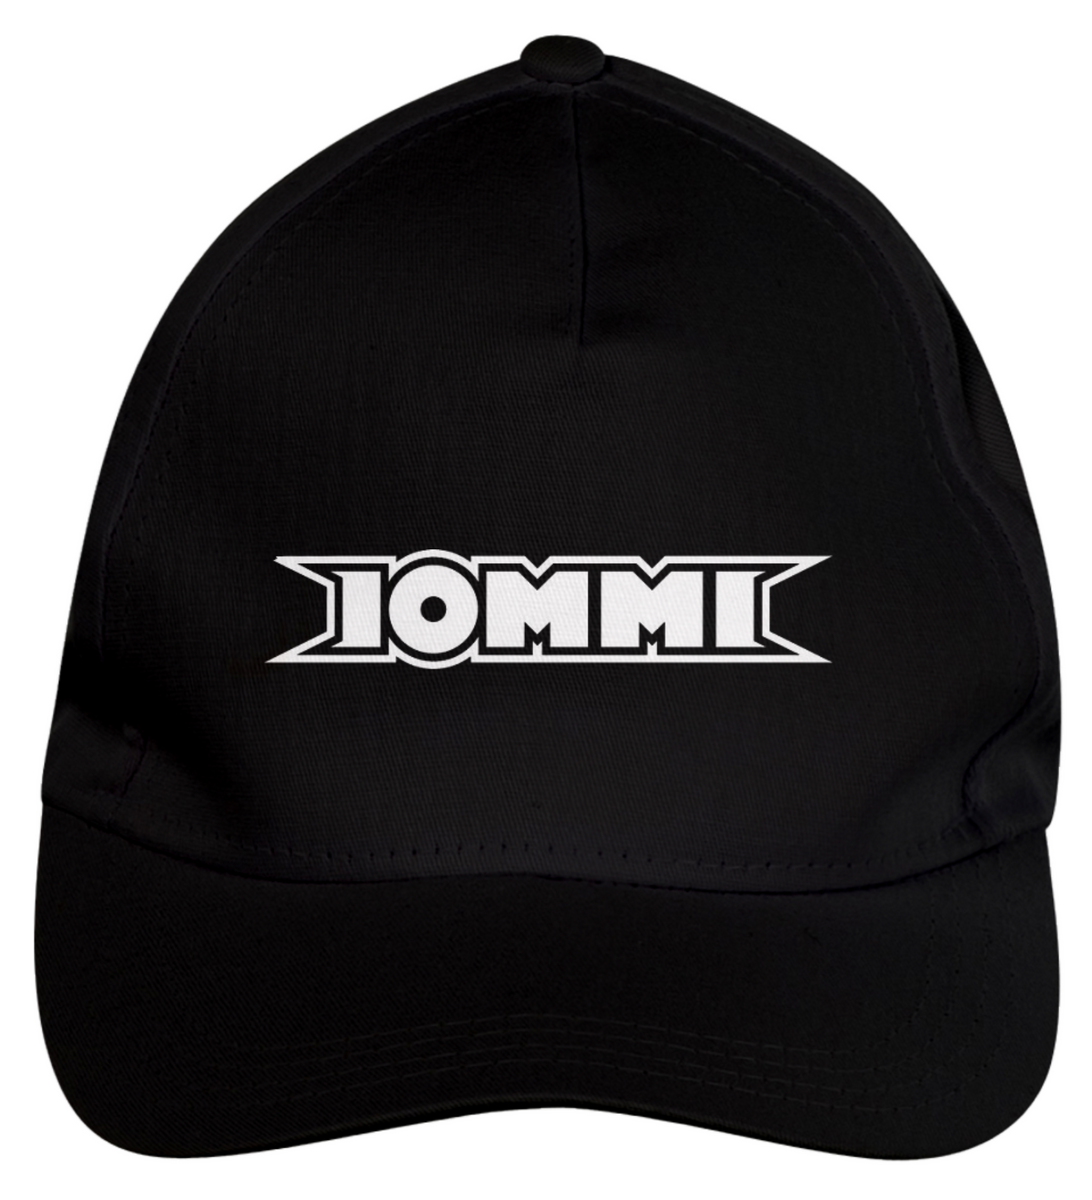 Nome do produto: Iommi